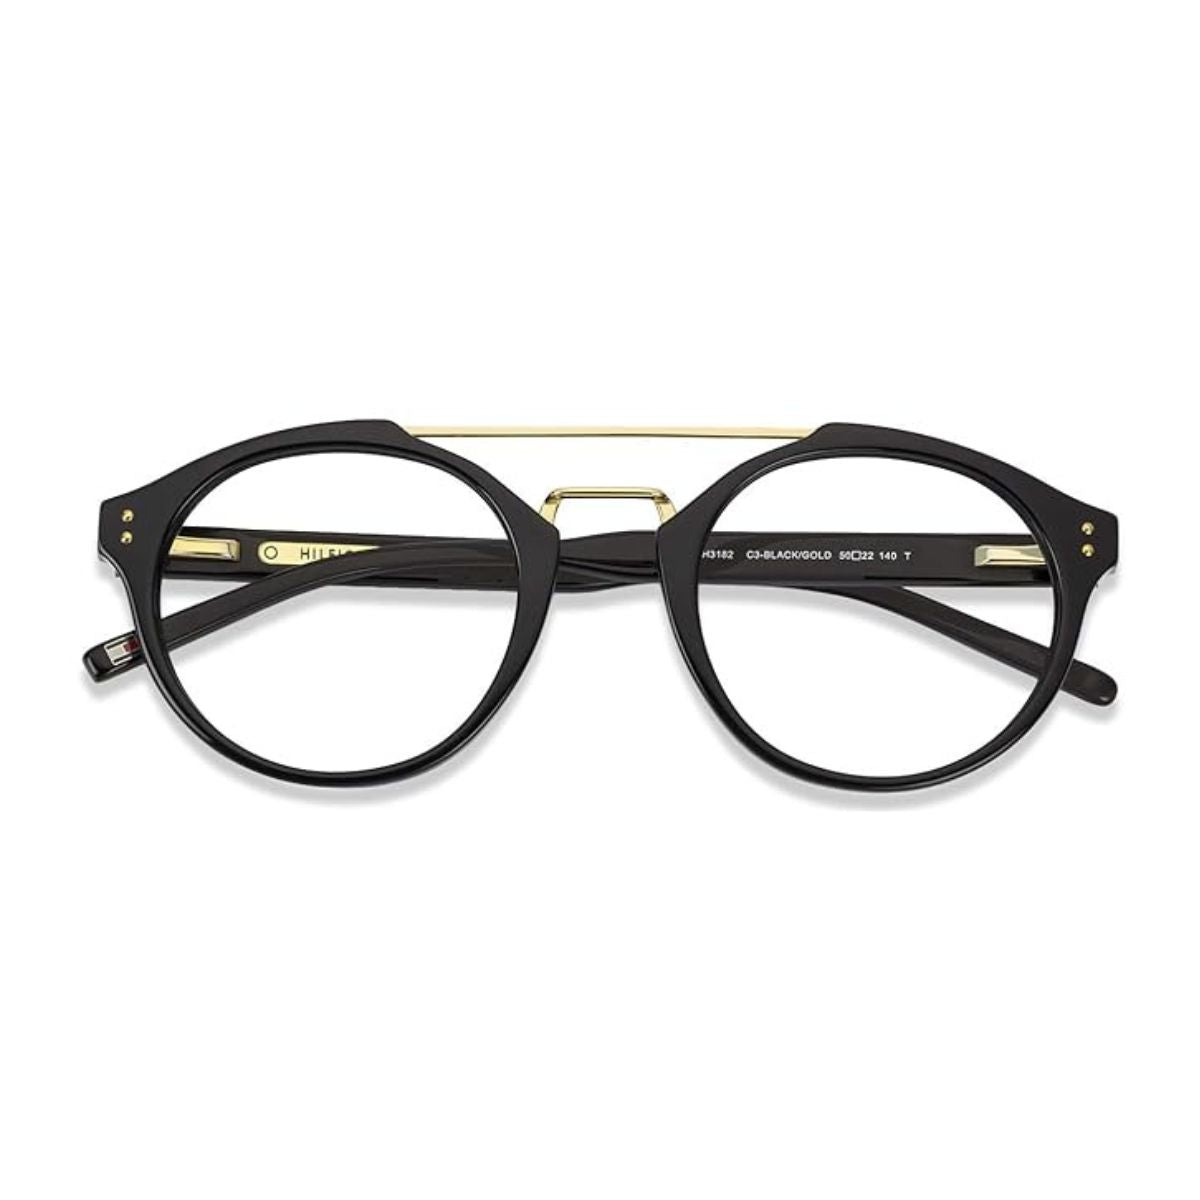 "Tommy Hilfiger 6128 C2 trendy eyewear & power glasses frame for women's at optorium"